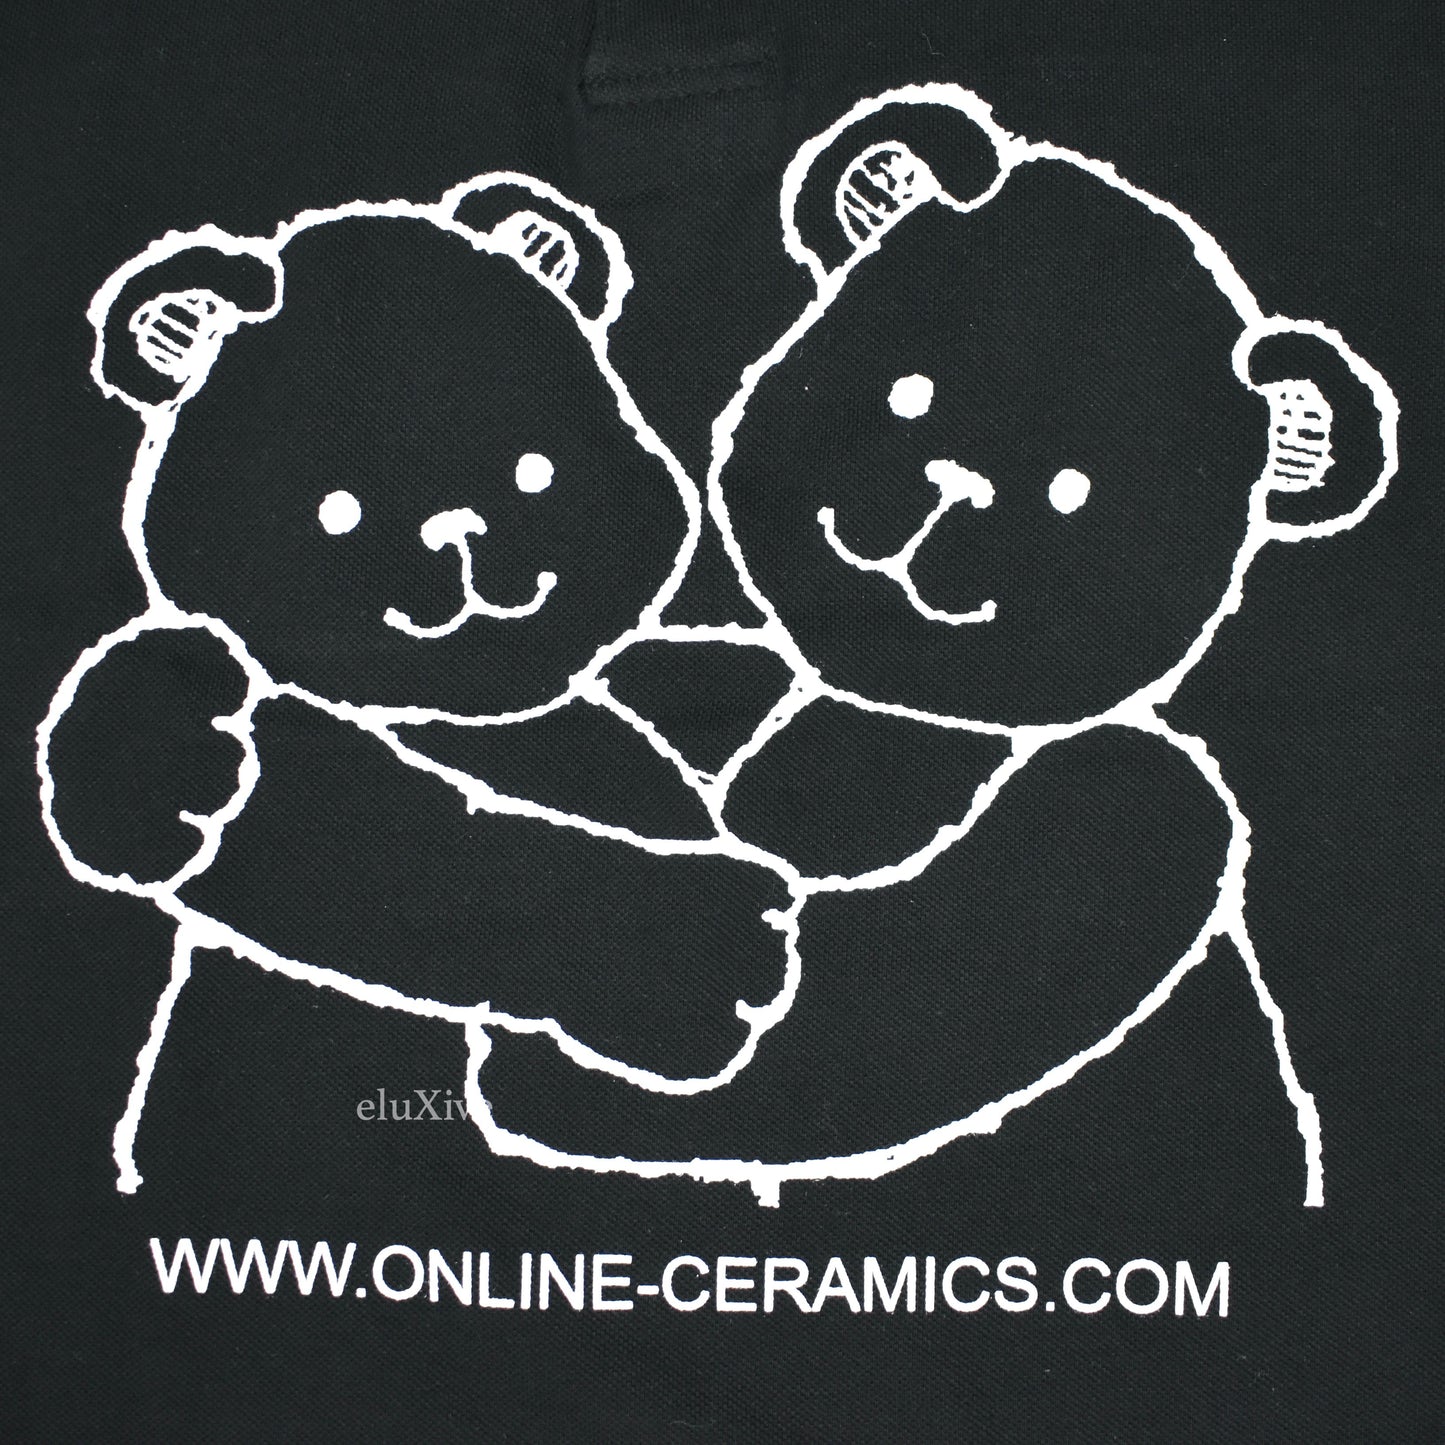 Online Ceramics - Bear Hug Polo Shirt (Black)